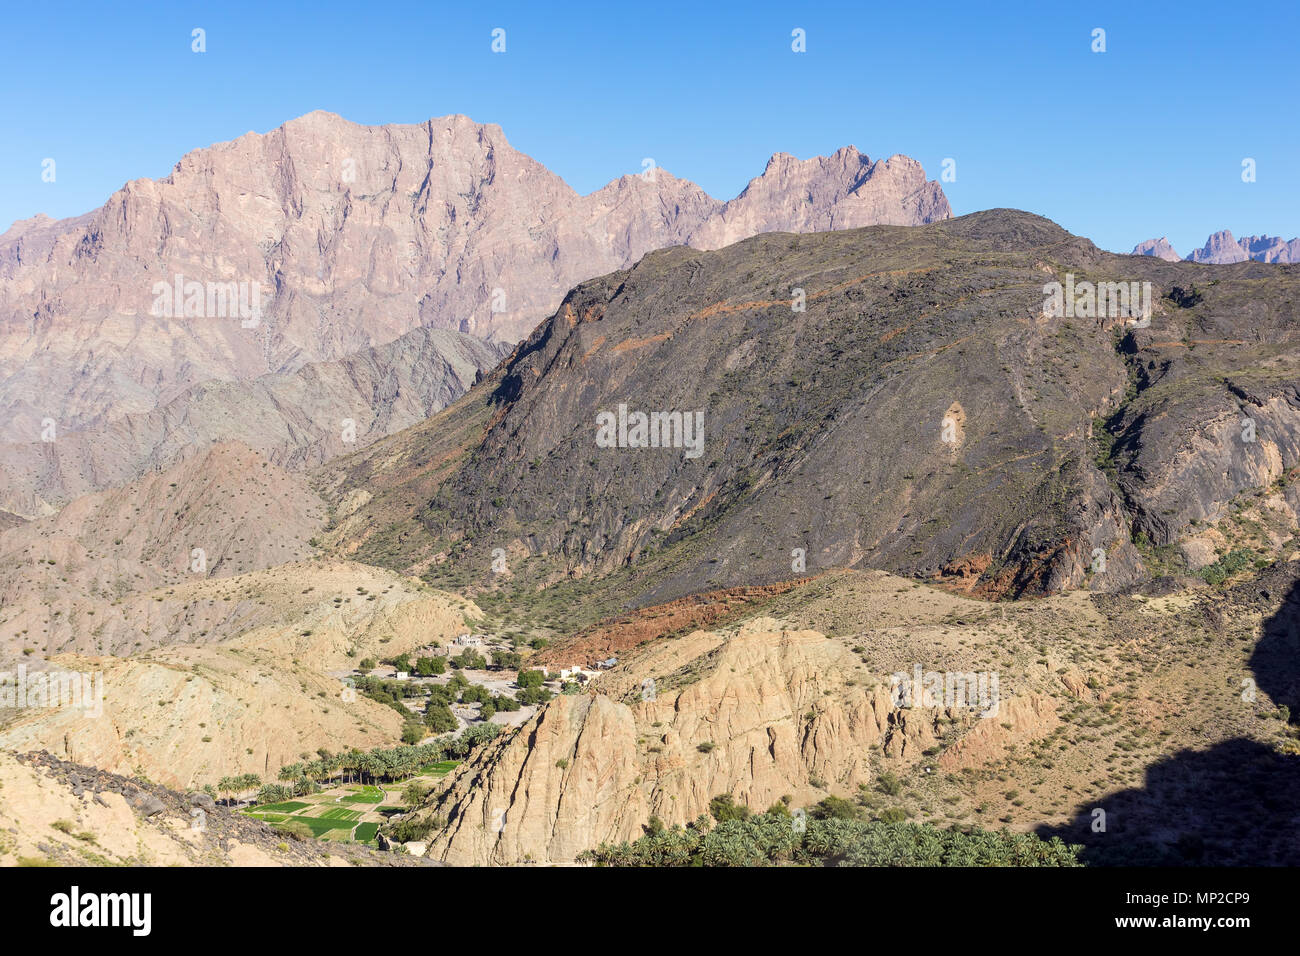 Mountains of Wadi Bani Awf - Oman Stock Photo